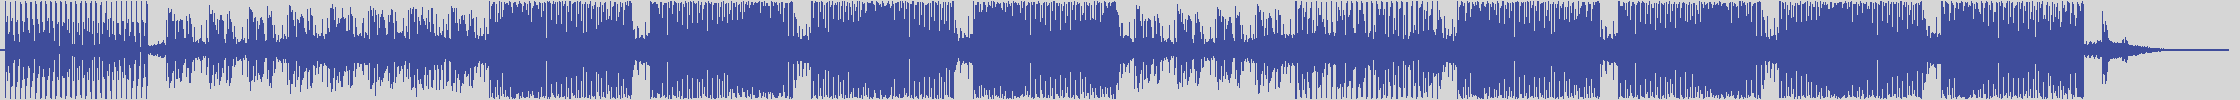 nf_boyz_records [NFY040] Costa Negra Project - Bass [Principal House Mix] audio wave form